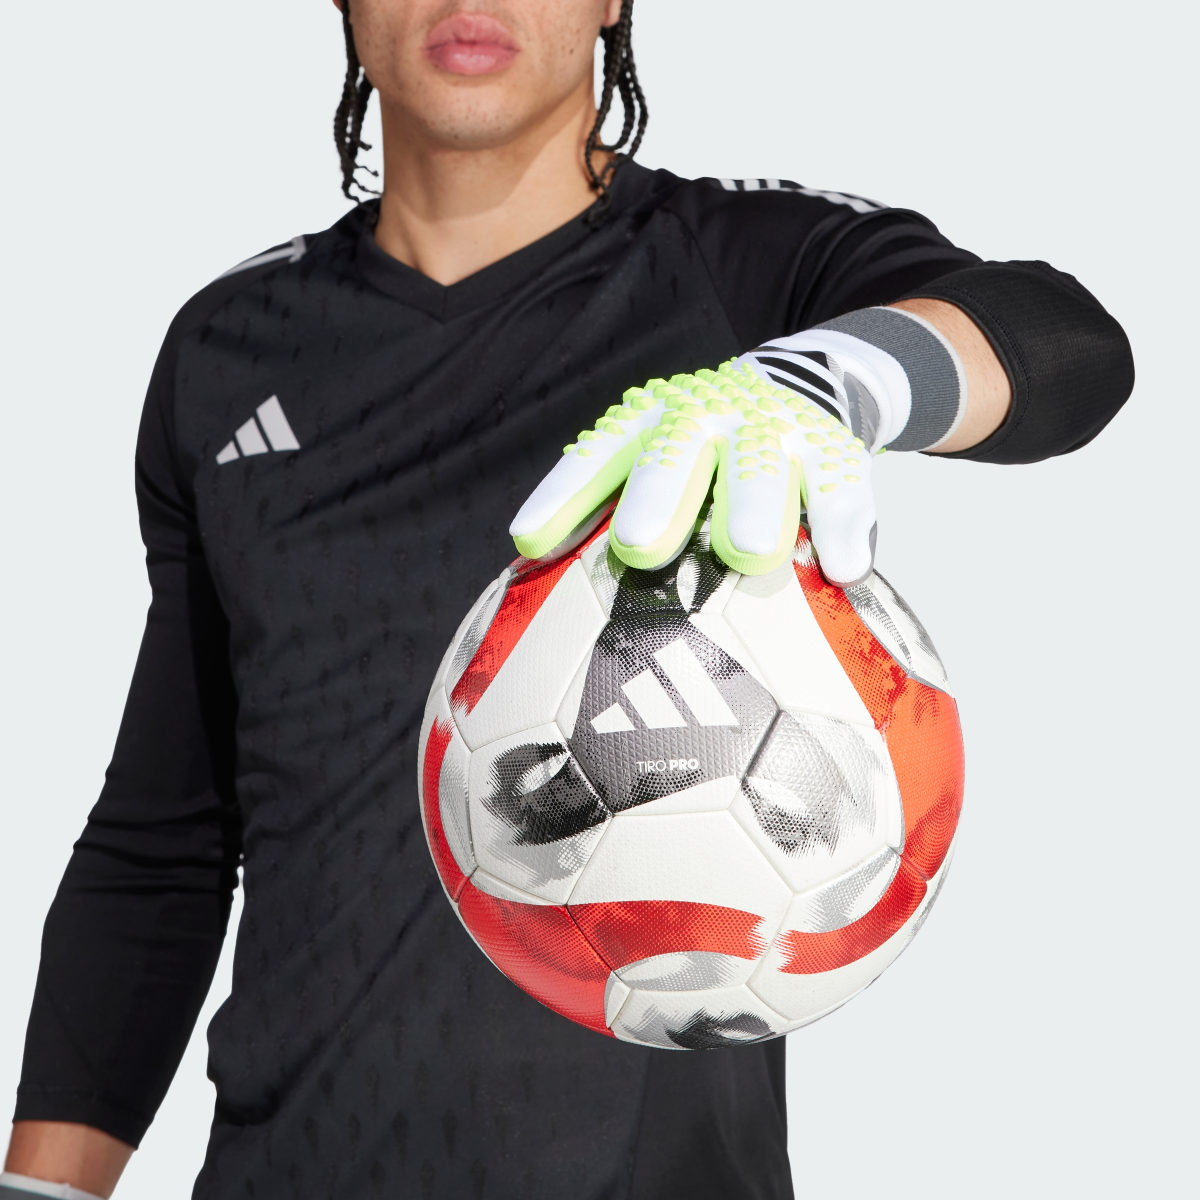 Adidas Predator Pro Goalkeeper Gloves. 4